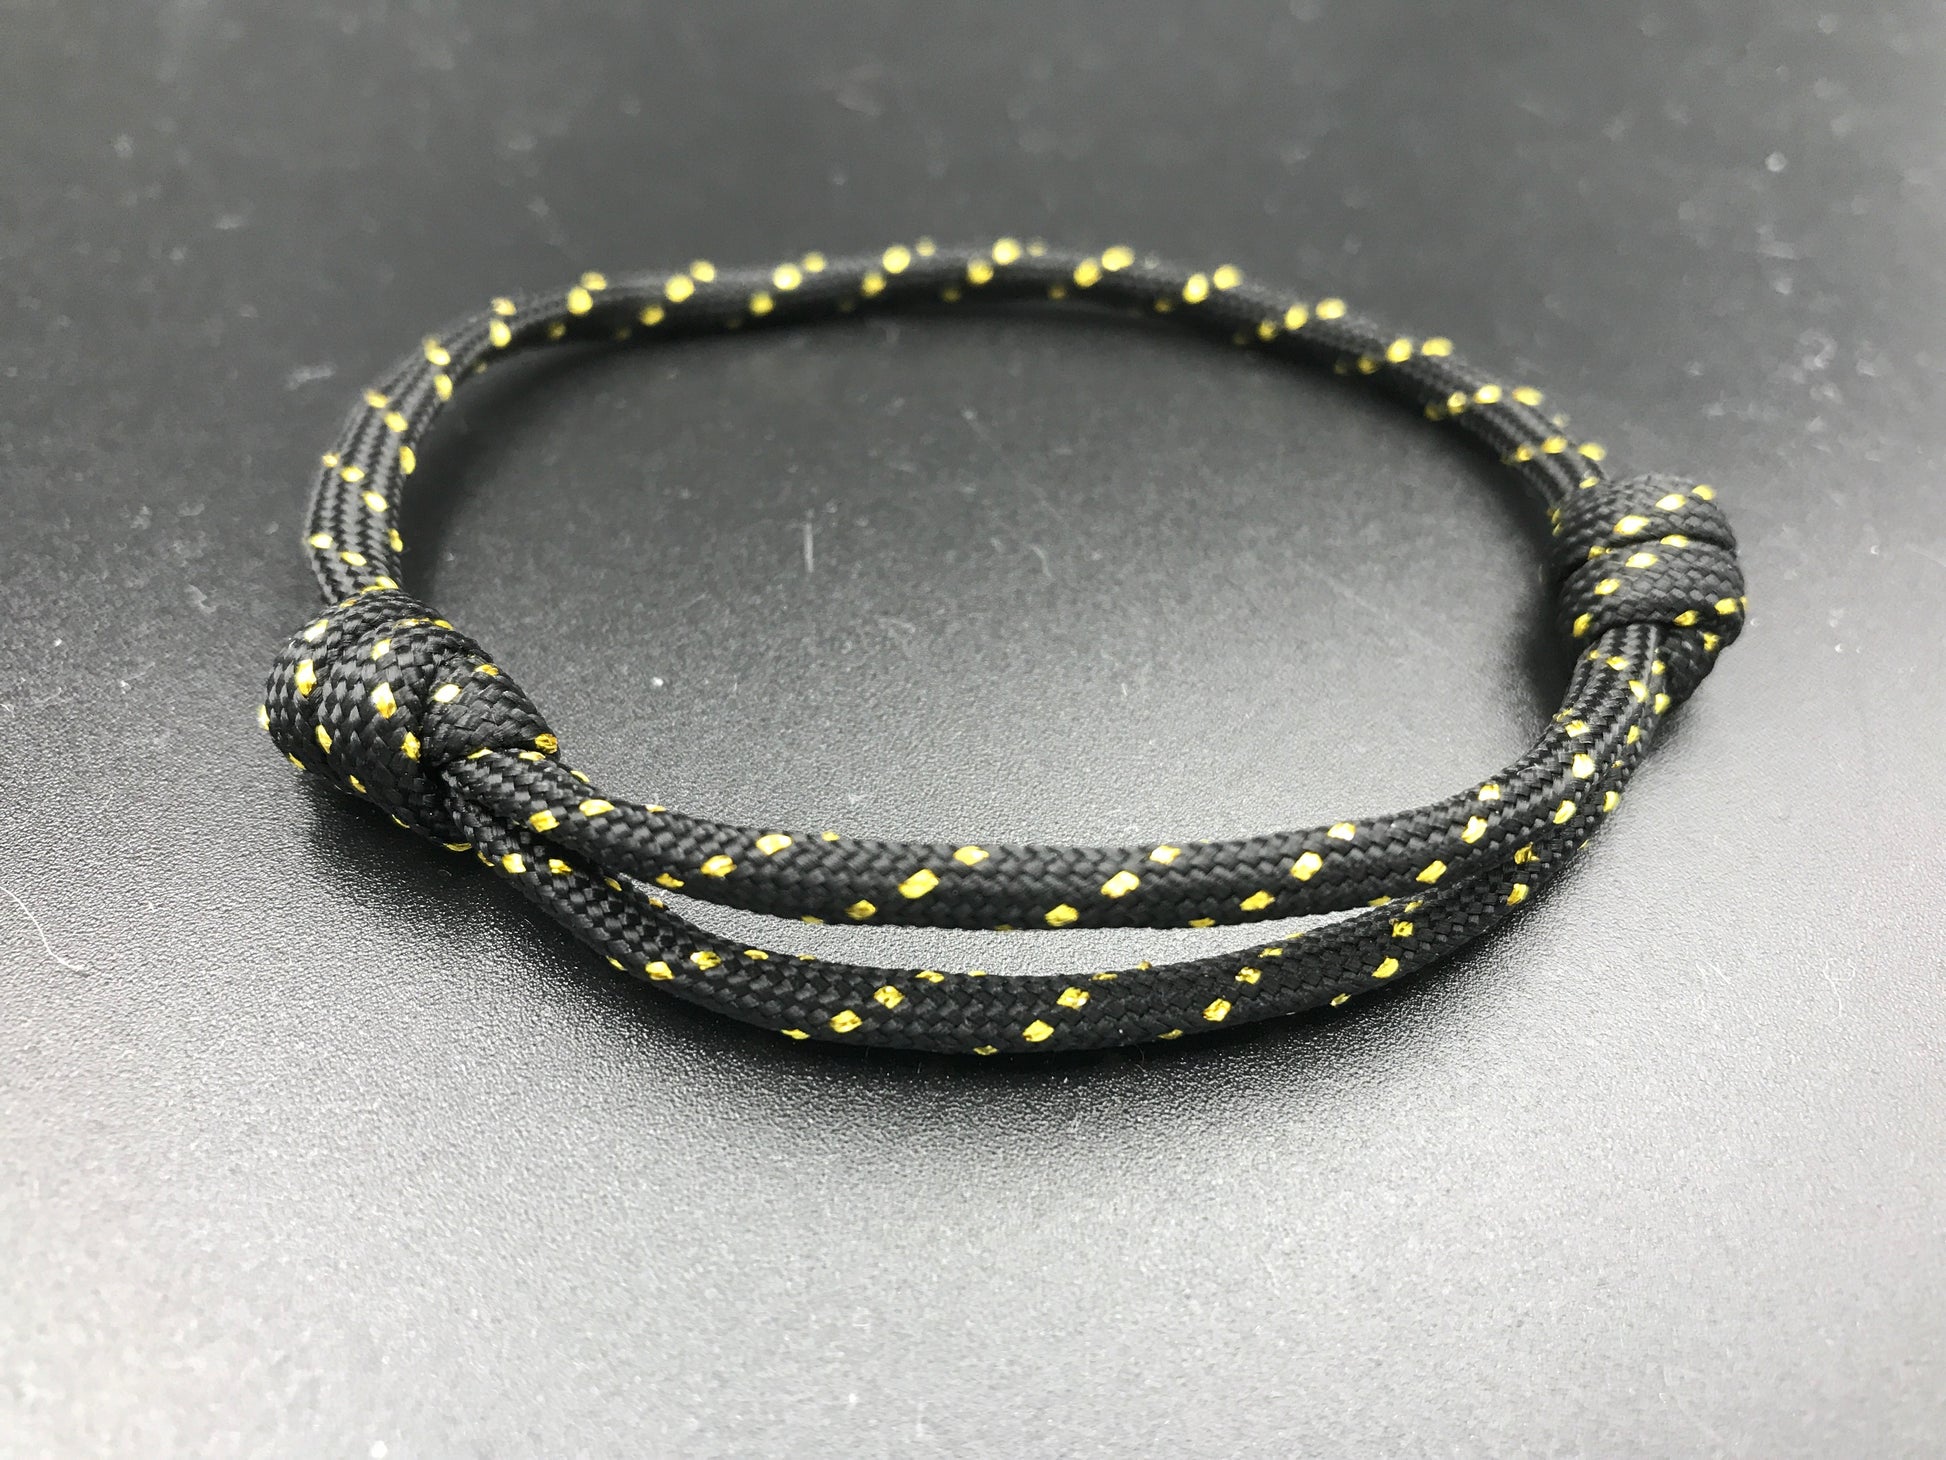 Paracord friendship bracelet in black and gold flecks lightweight and adjustable